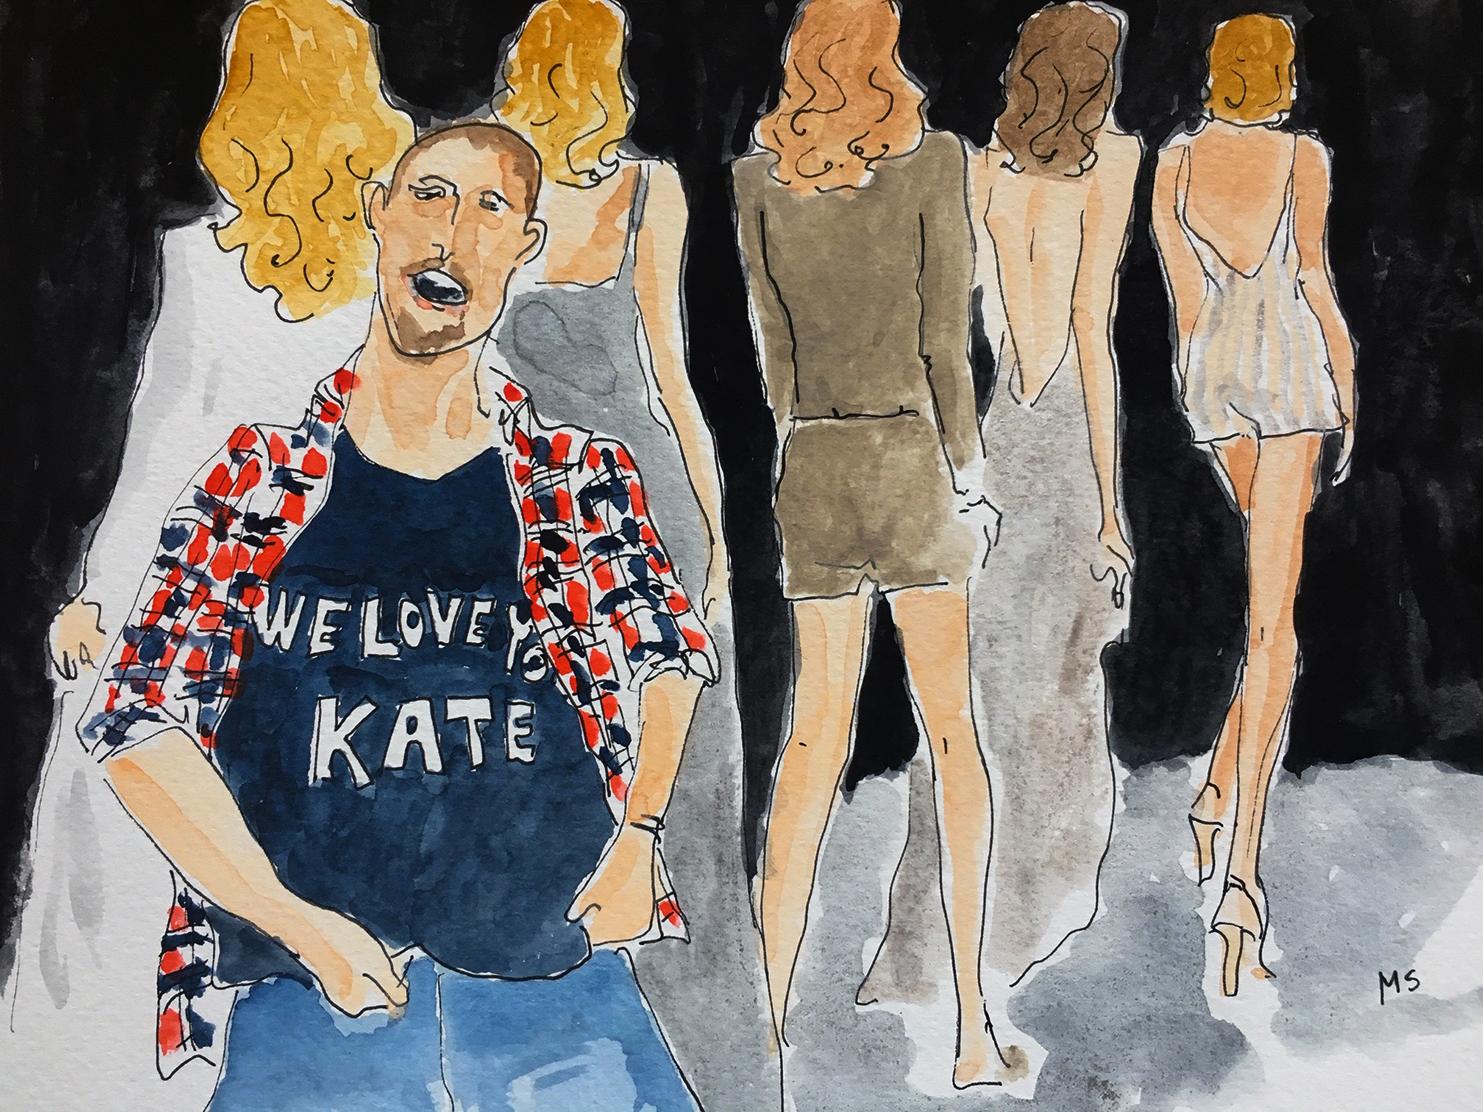 Manuel Santelices Portrait Painting - Fashion designer "Alexander McQueen/ wearing a We love Kate Moss" Tshirt